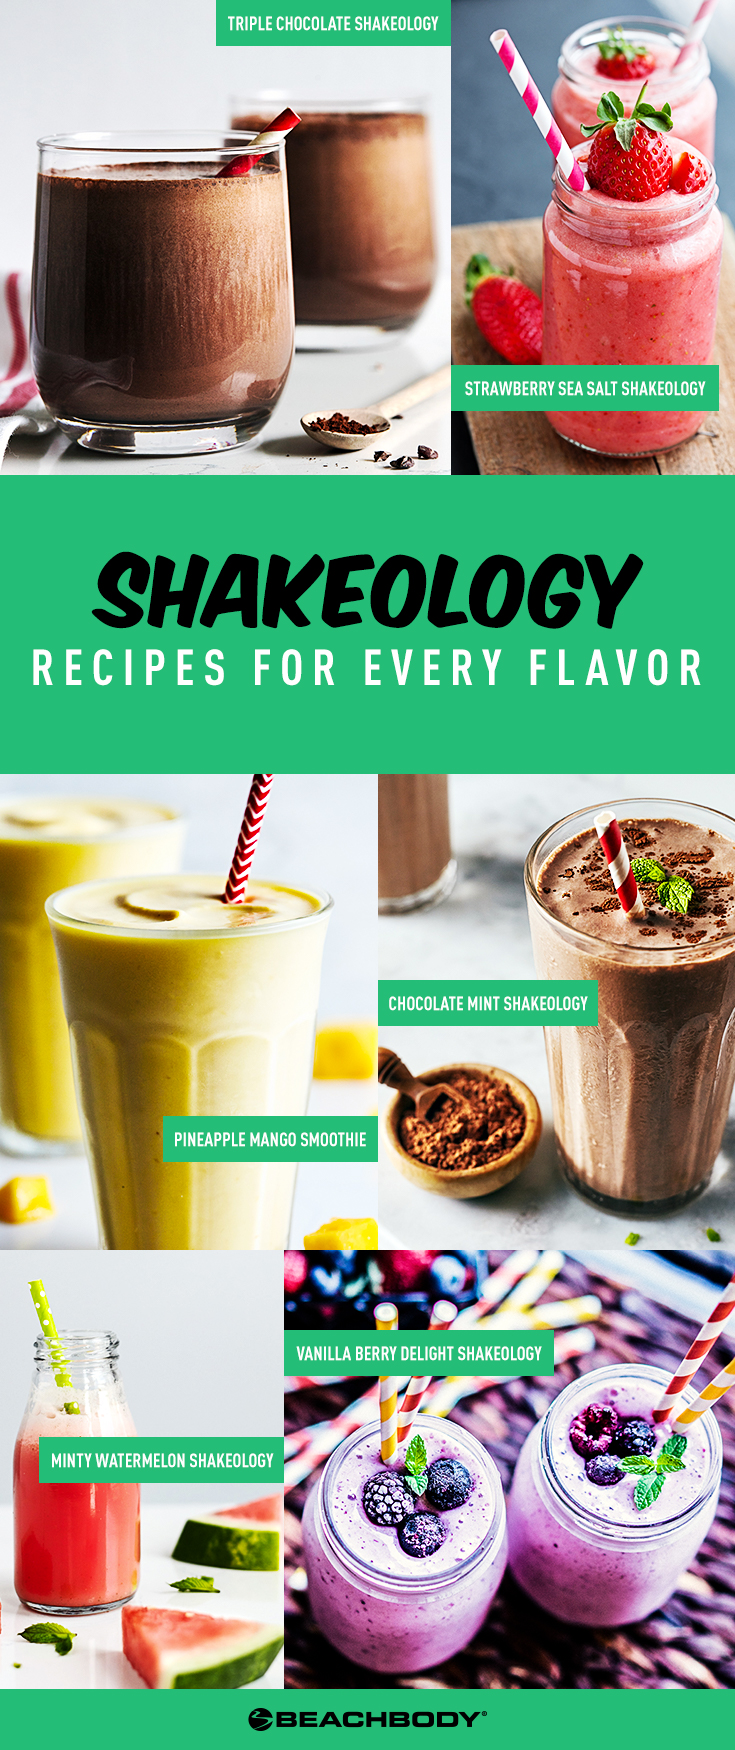 Shakeology Recipes for Every Shakeology Flavor